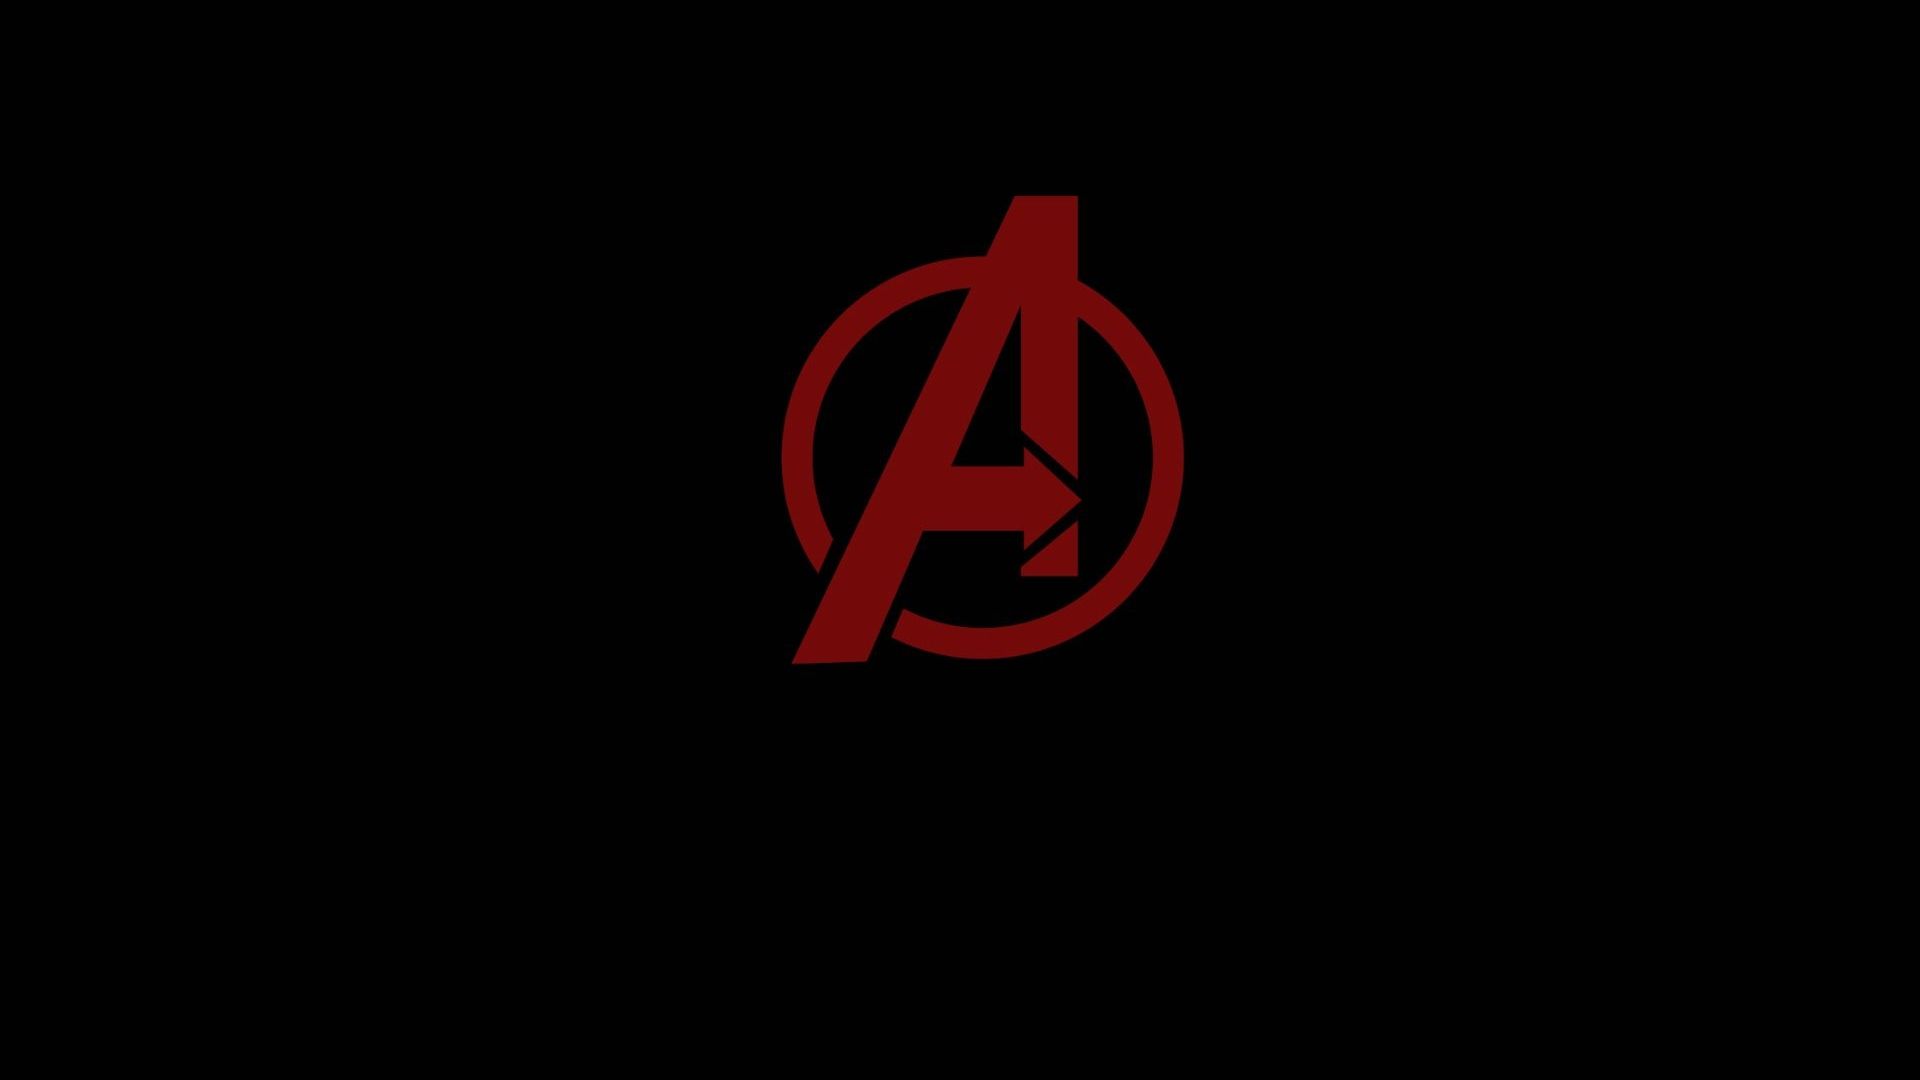 Free download 50 Avengers Symbol Wallpaper Download at